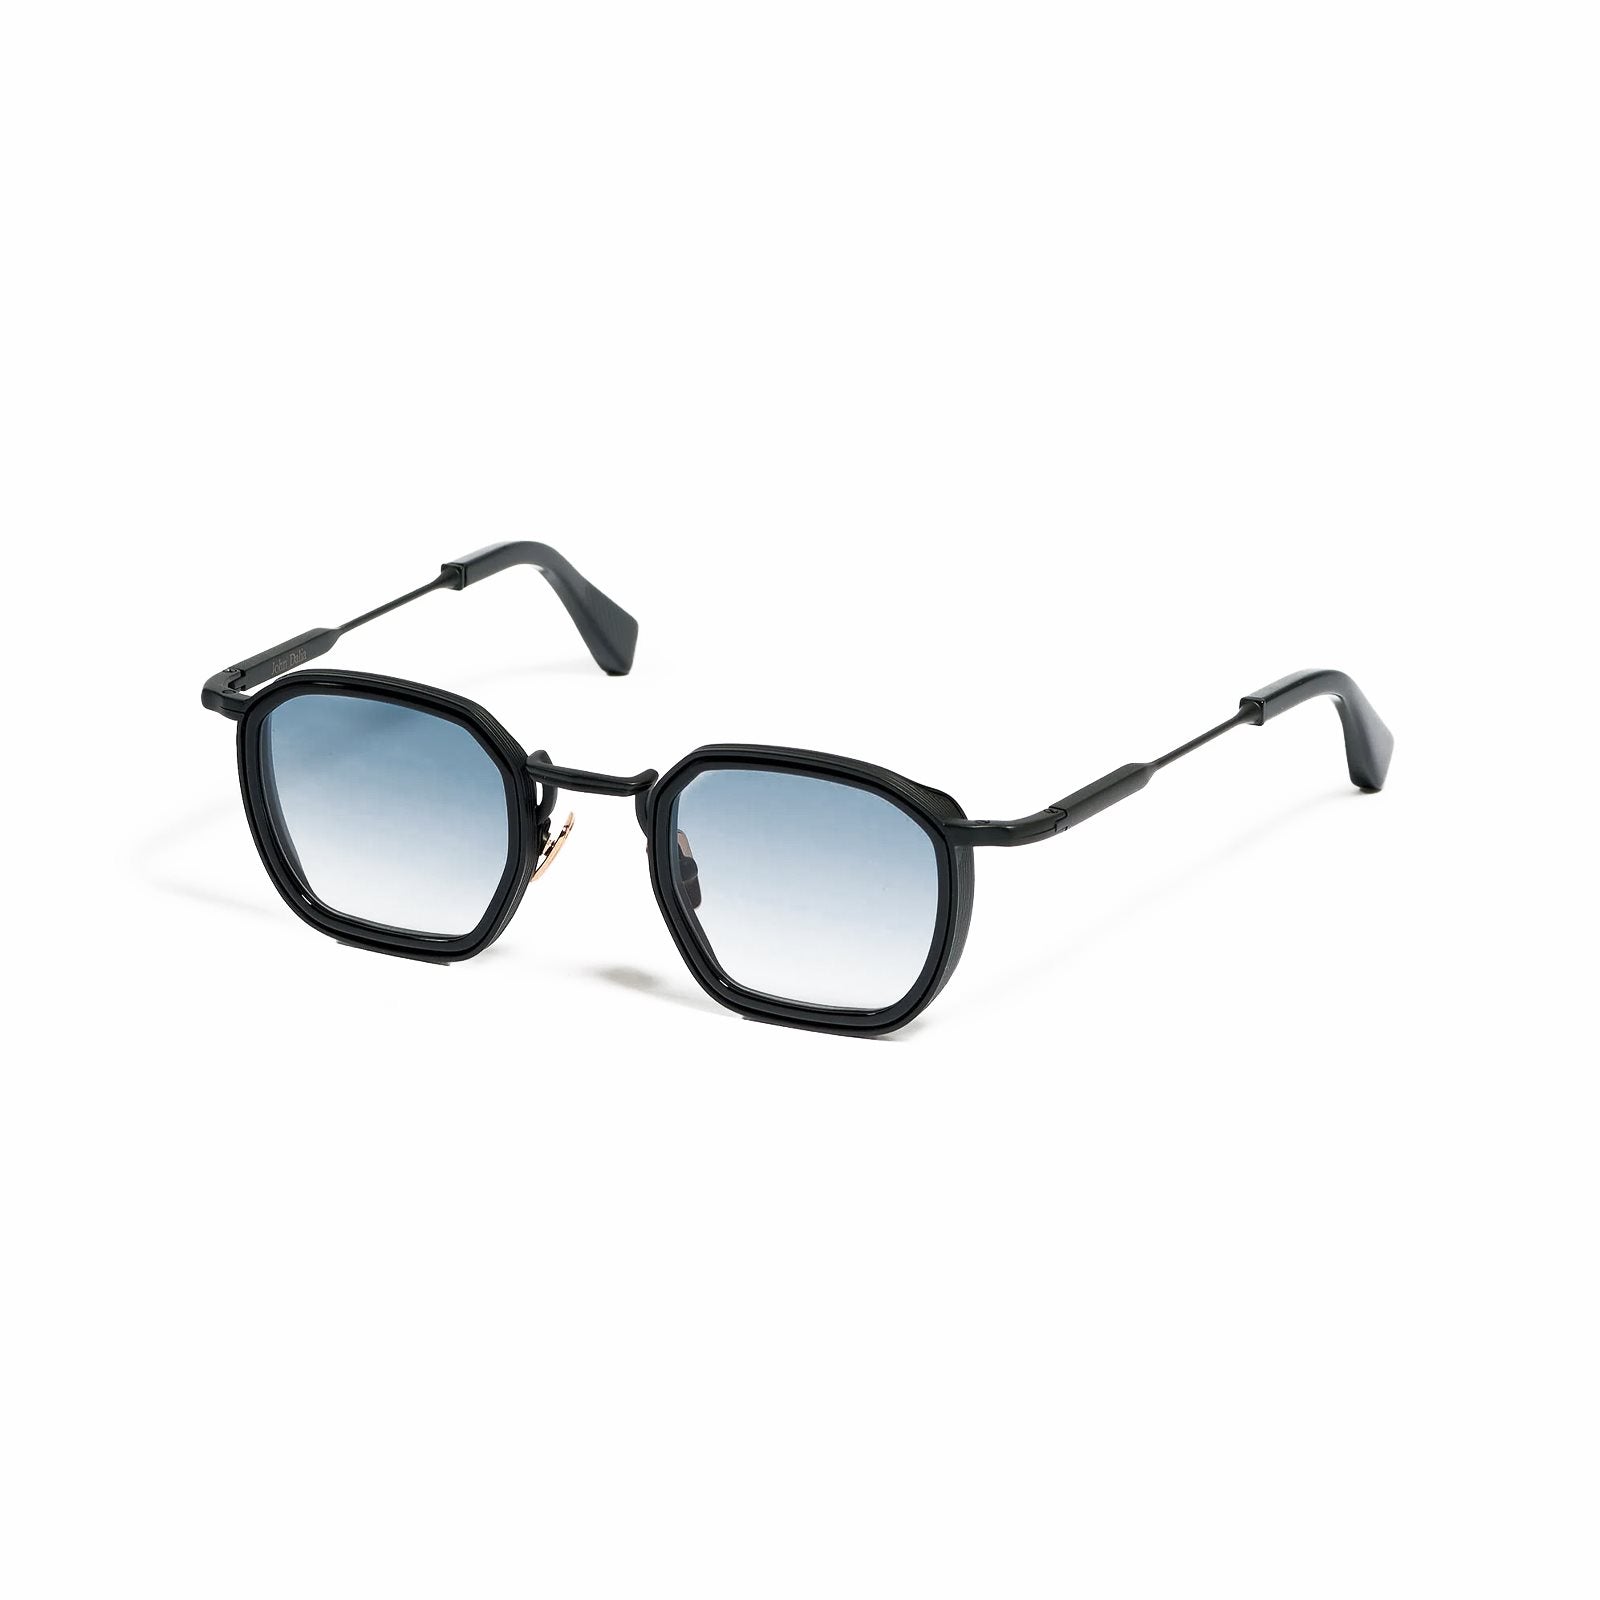 Leo 2 sunglasses